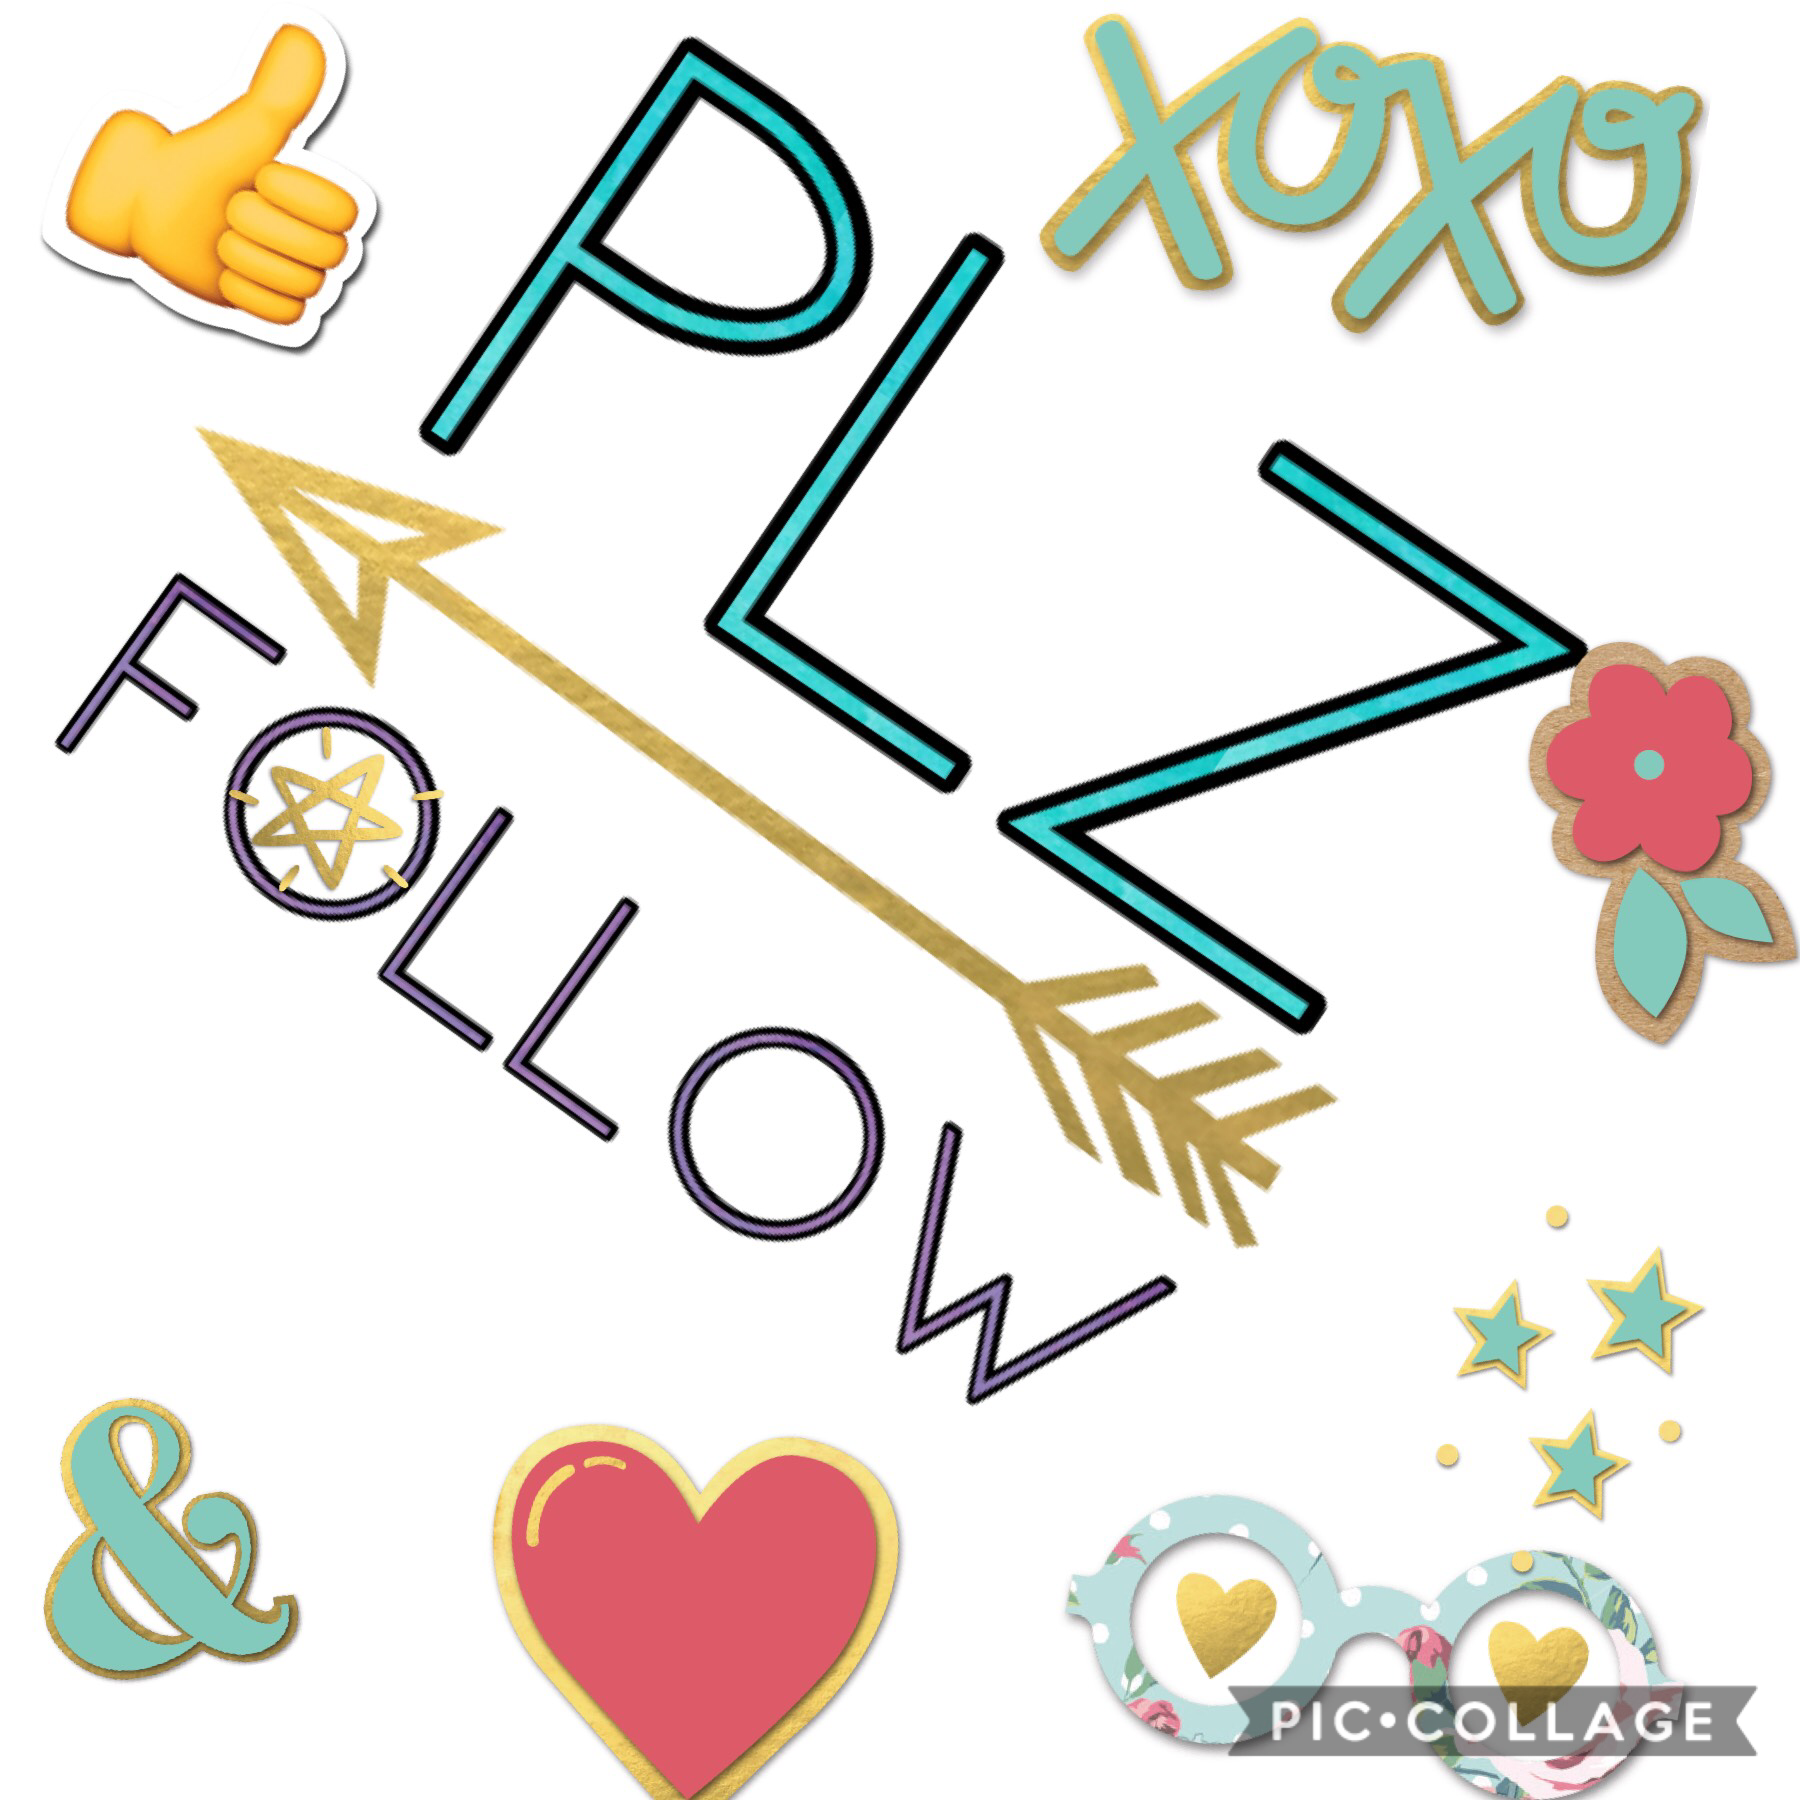 Plz follow